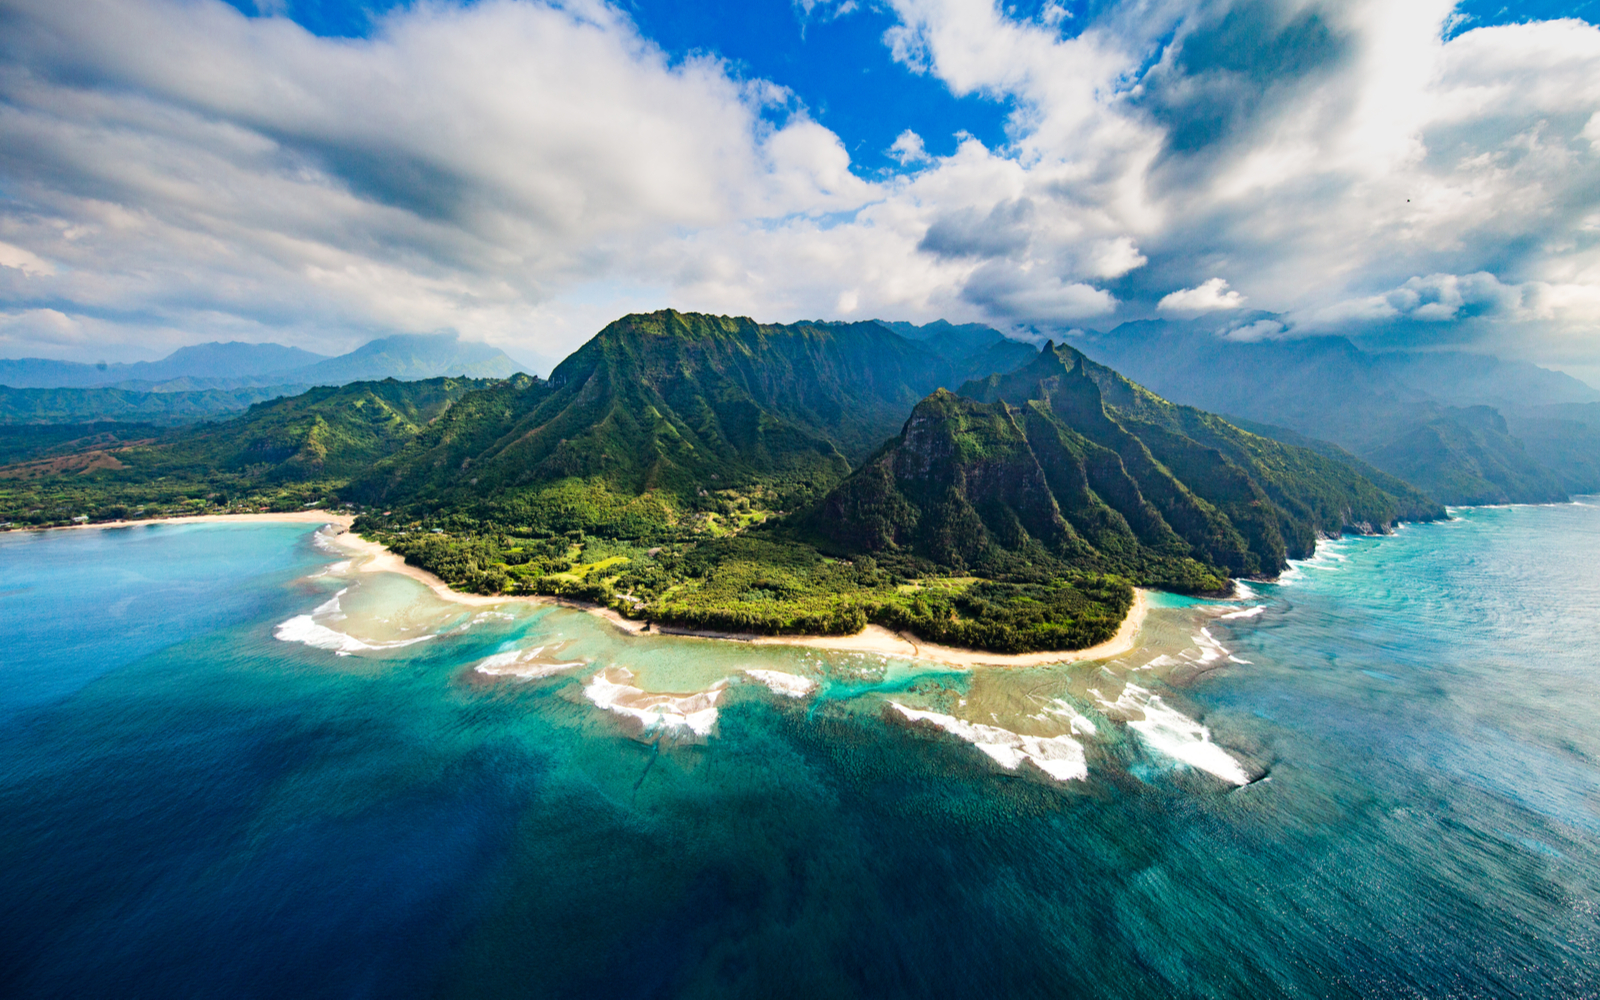 Where to Stay in Kauai | 5 Best Neighborhoods & Hotels